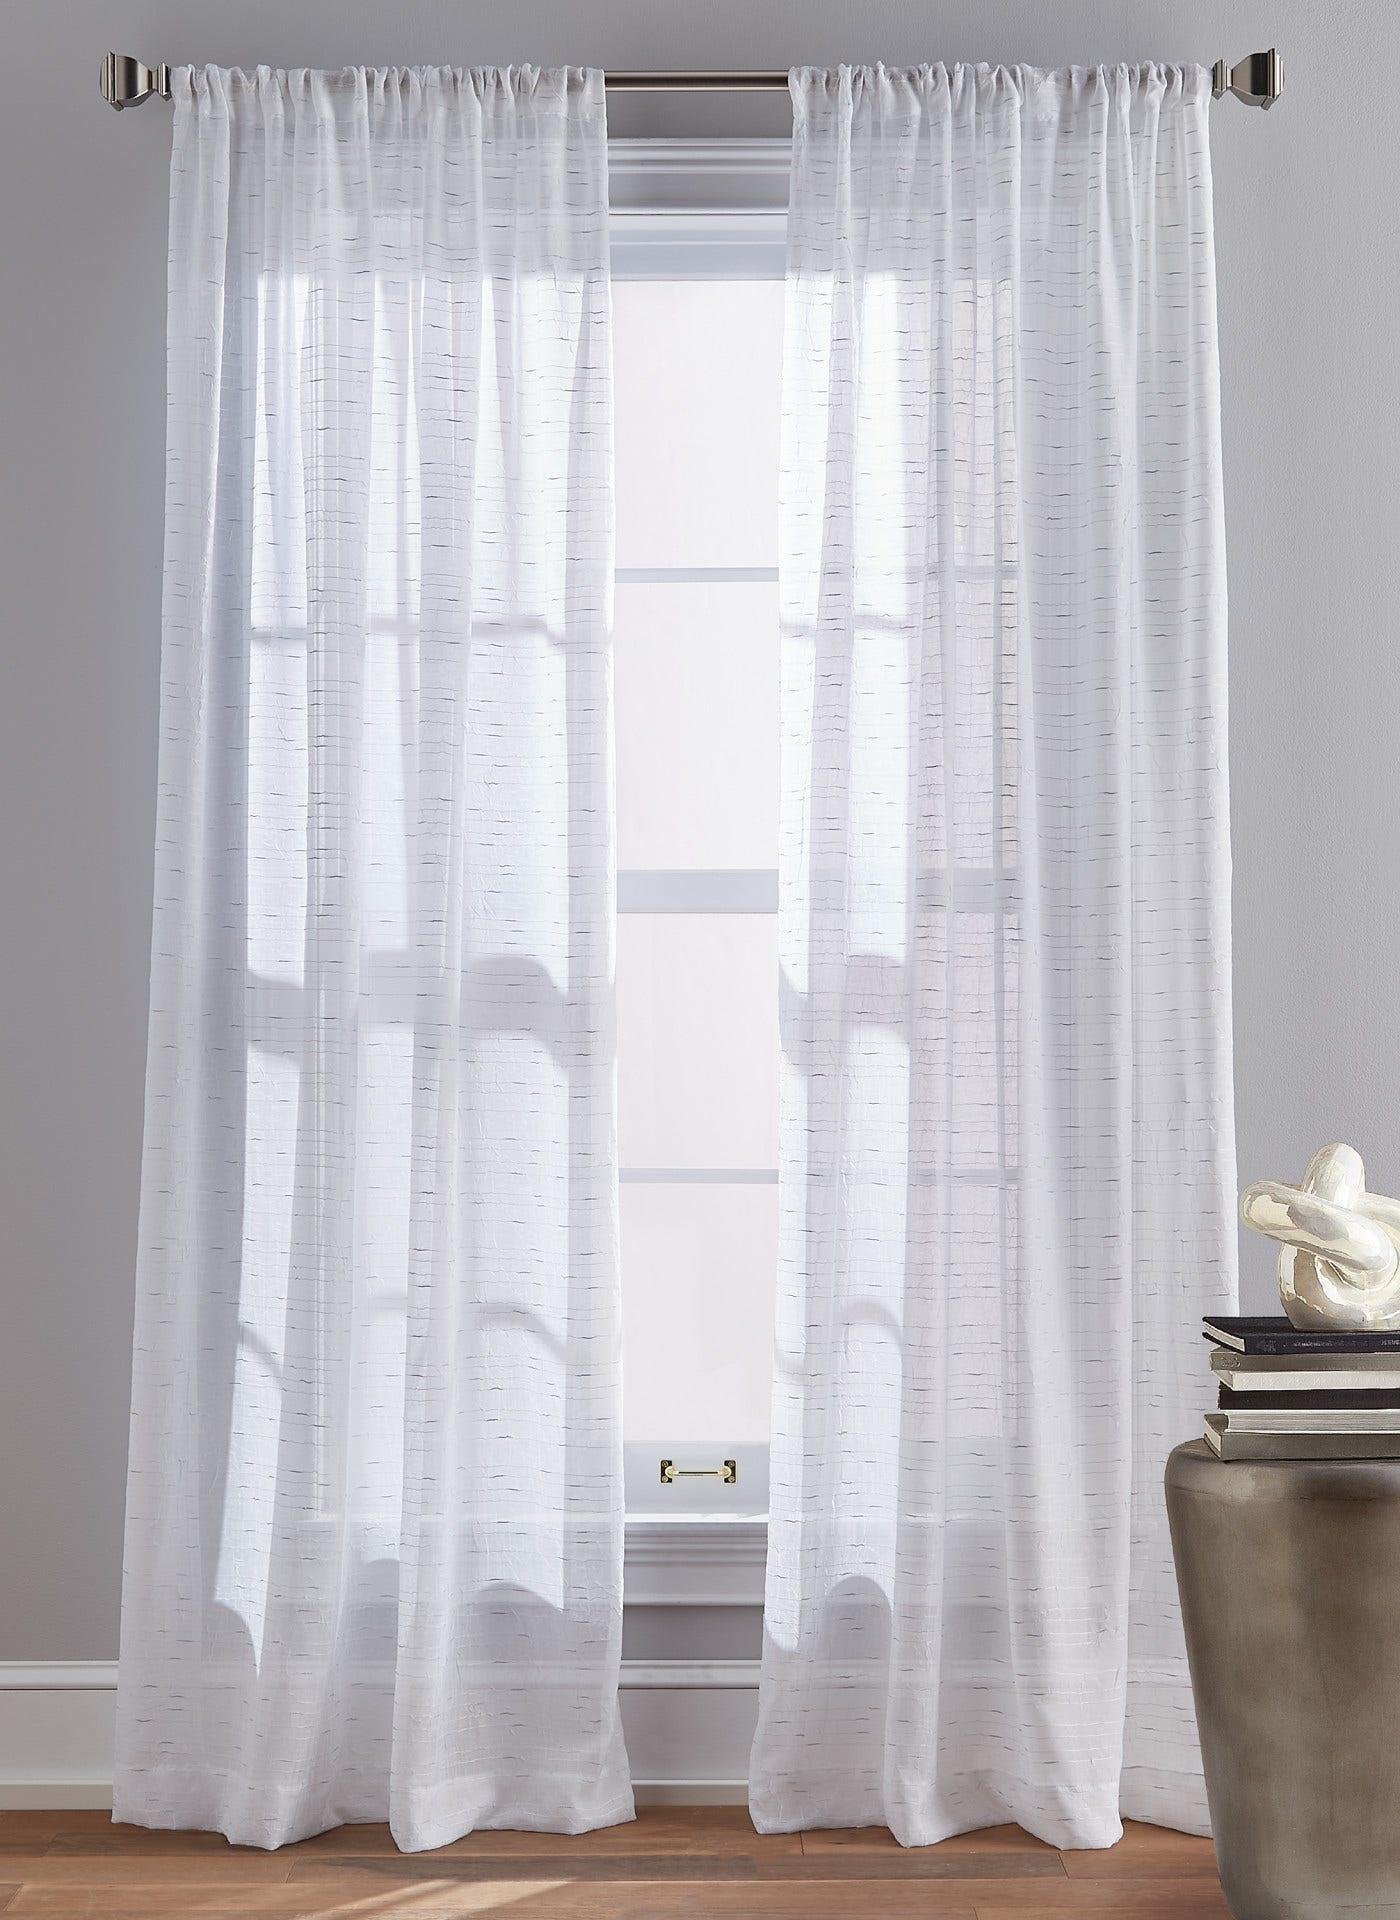 DKNY Urban Silver Sparkle Window Panel Curtains in Grey Size 50 X 96